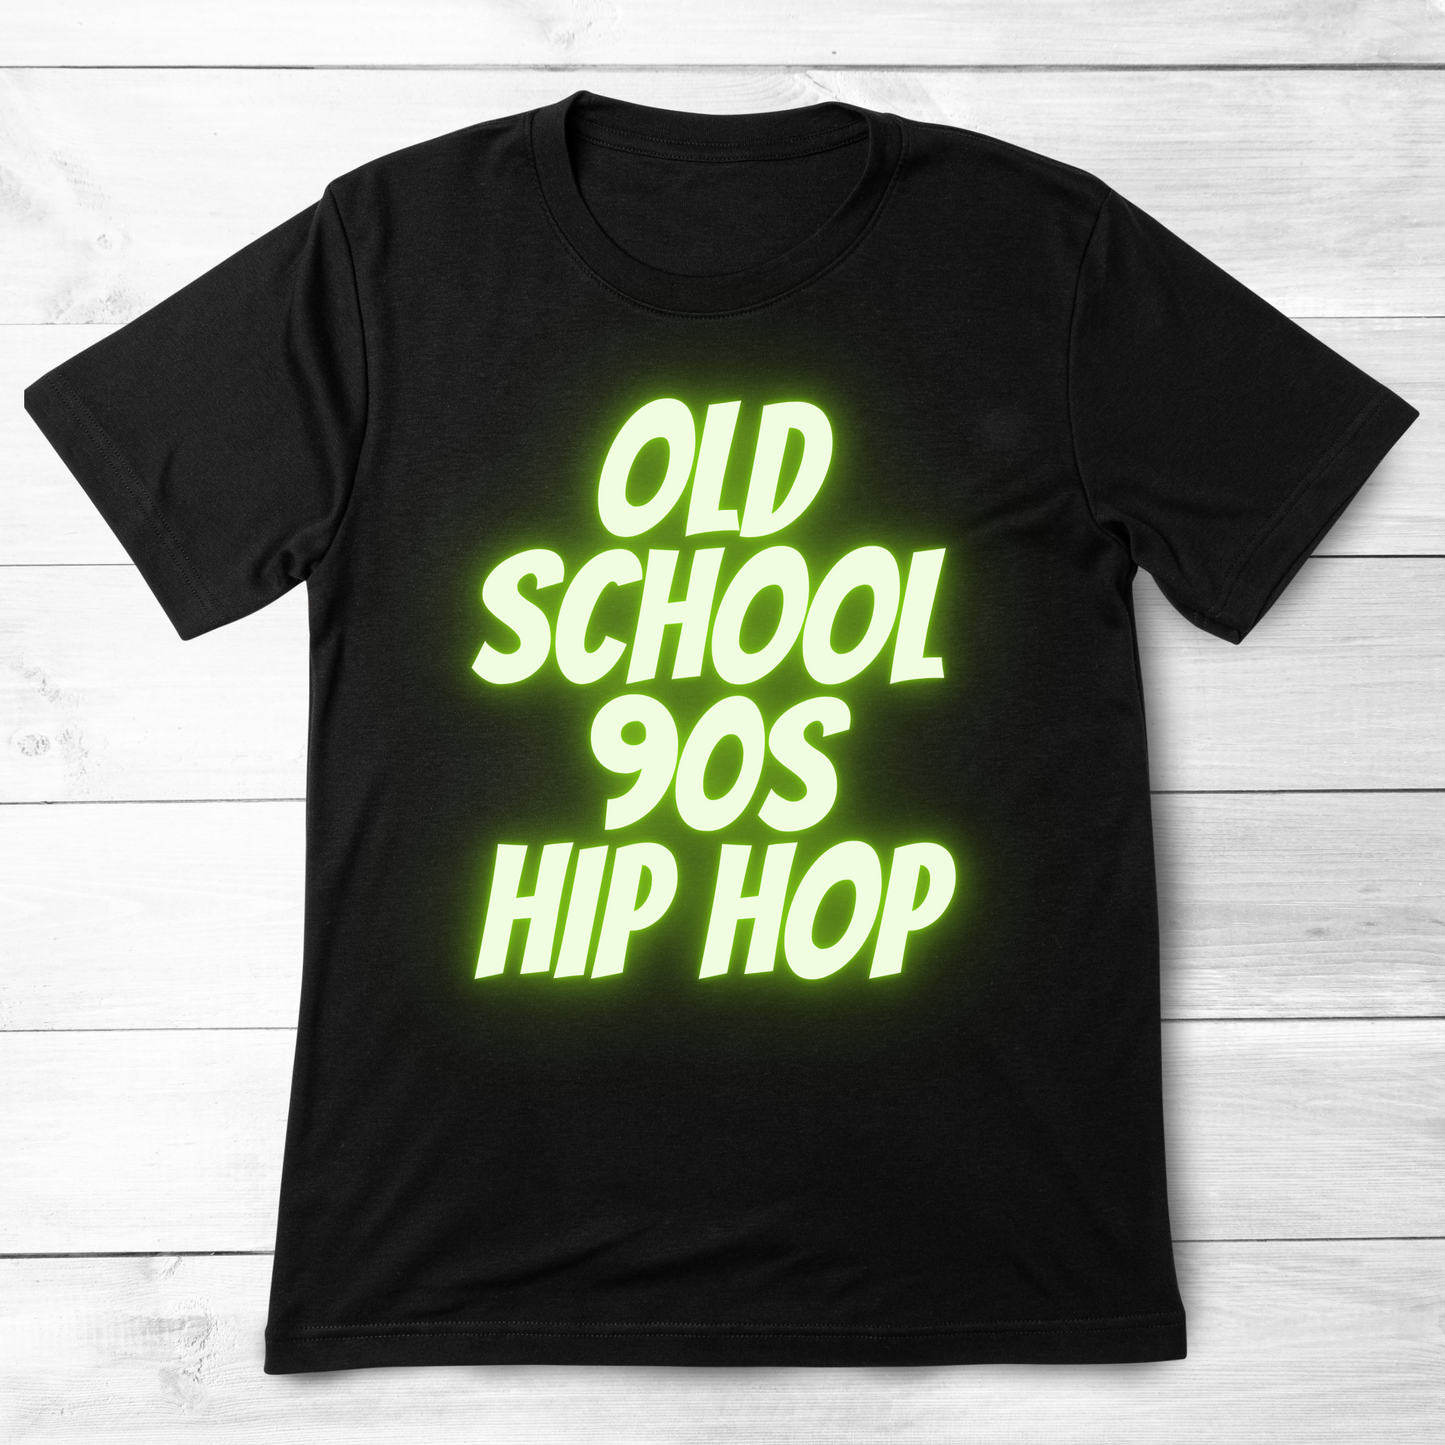 Old School 90s Hip Hop Cassette Shirt - Premium t-shirt from Lees Krazy Teez - Shop now at Lees Krazy Teez